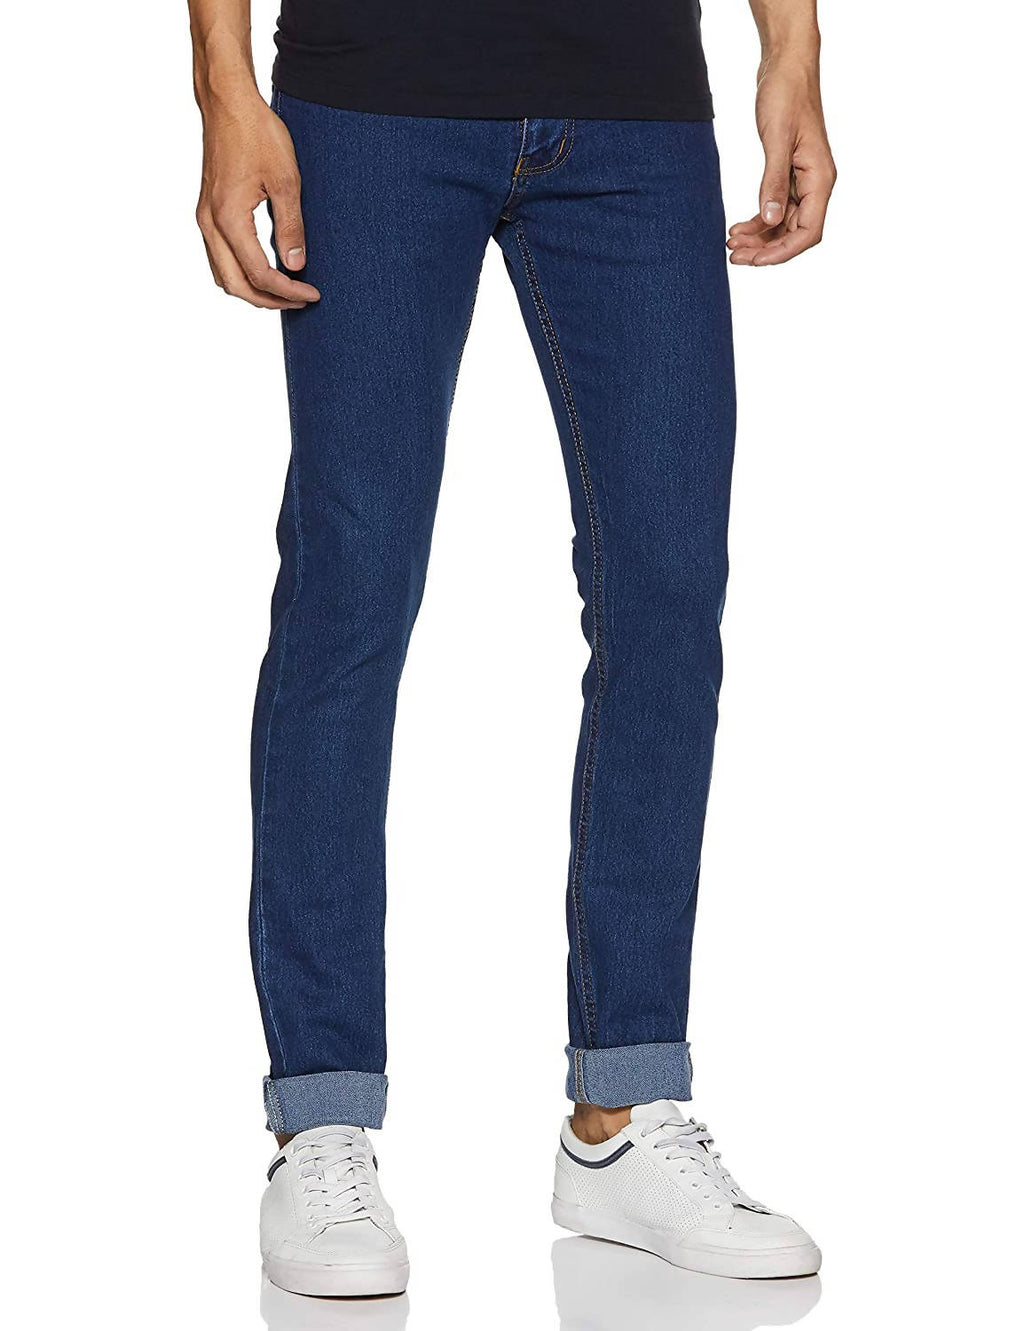 Neostreak Men's Slim Fit Stretchable Jeans